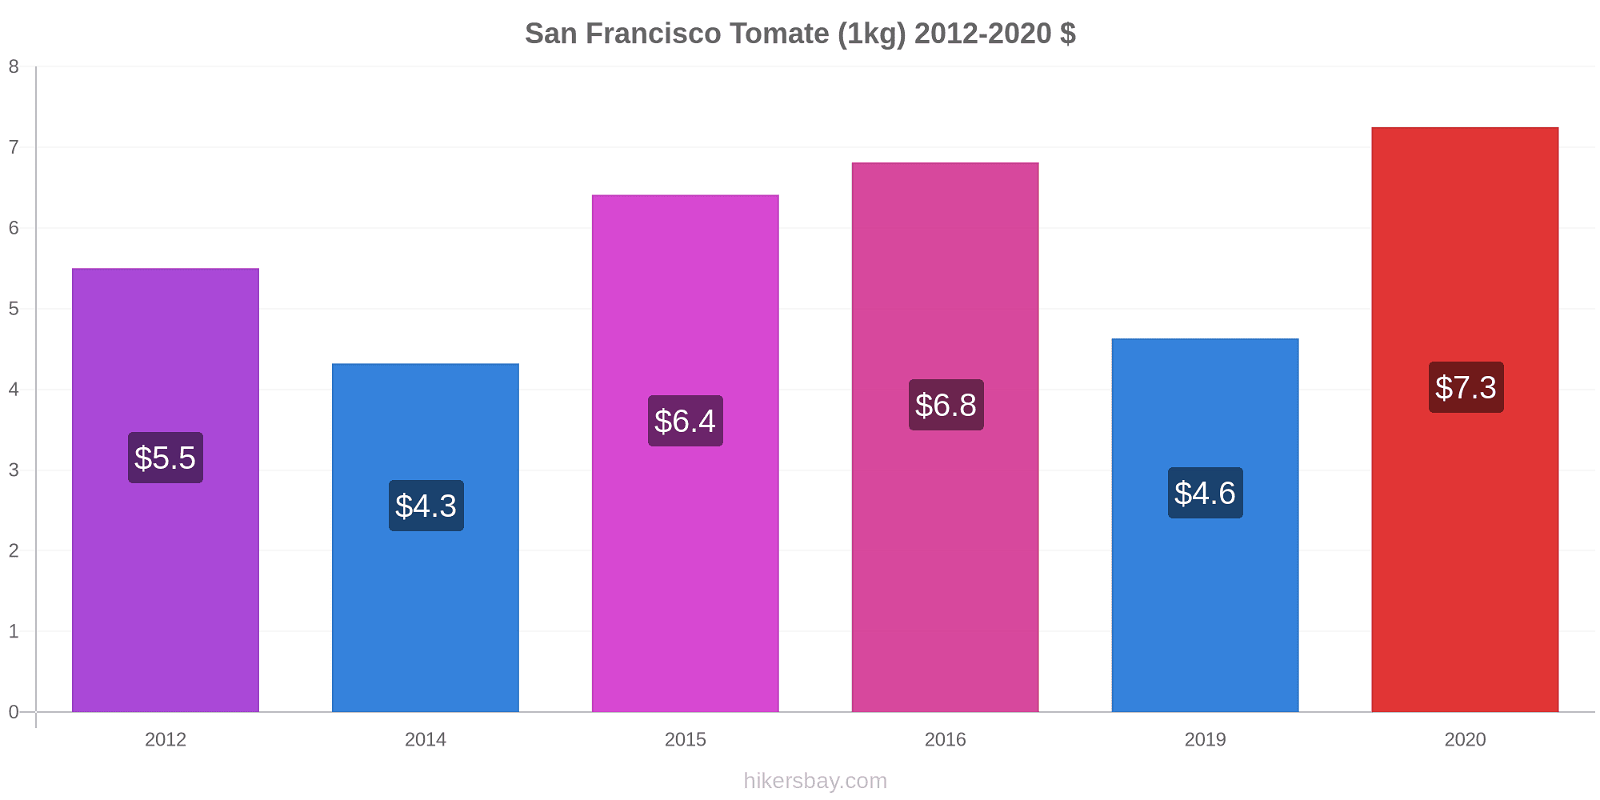 San Francisco changements de prix Tomate (1kg) hikersbay.com